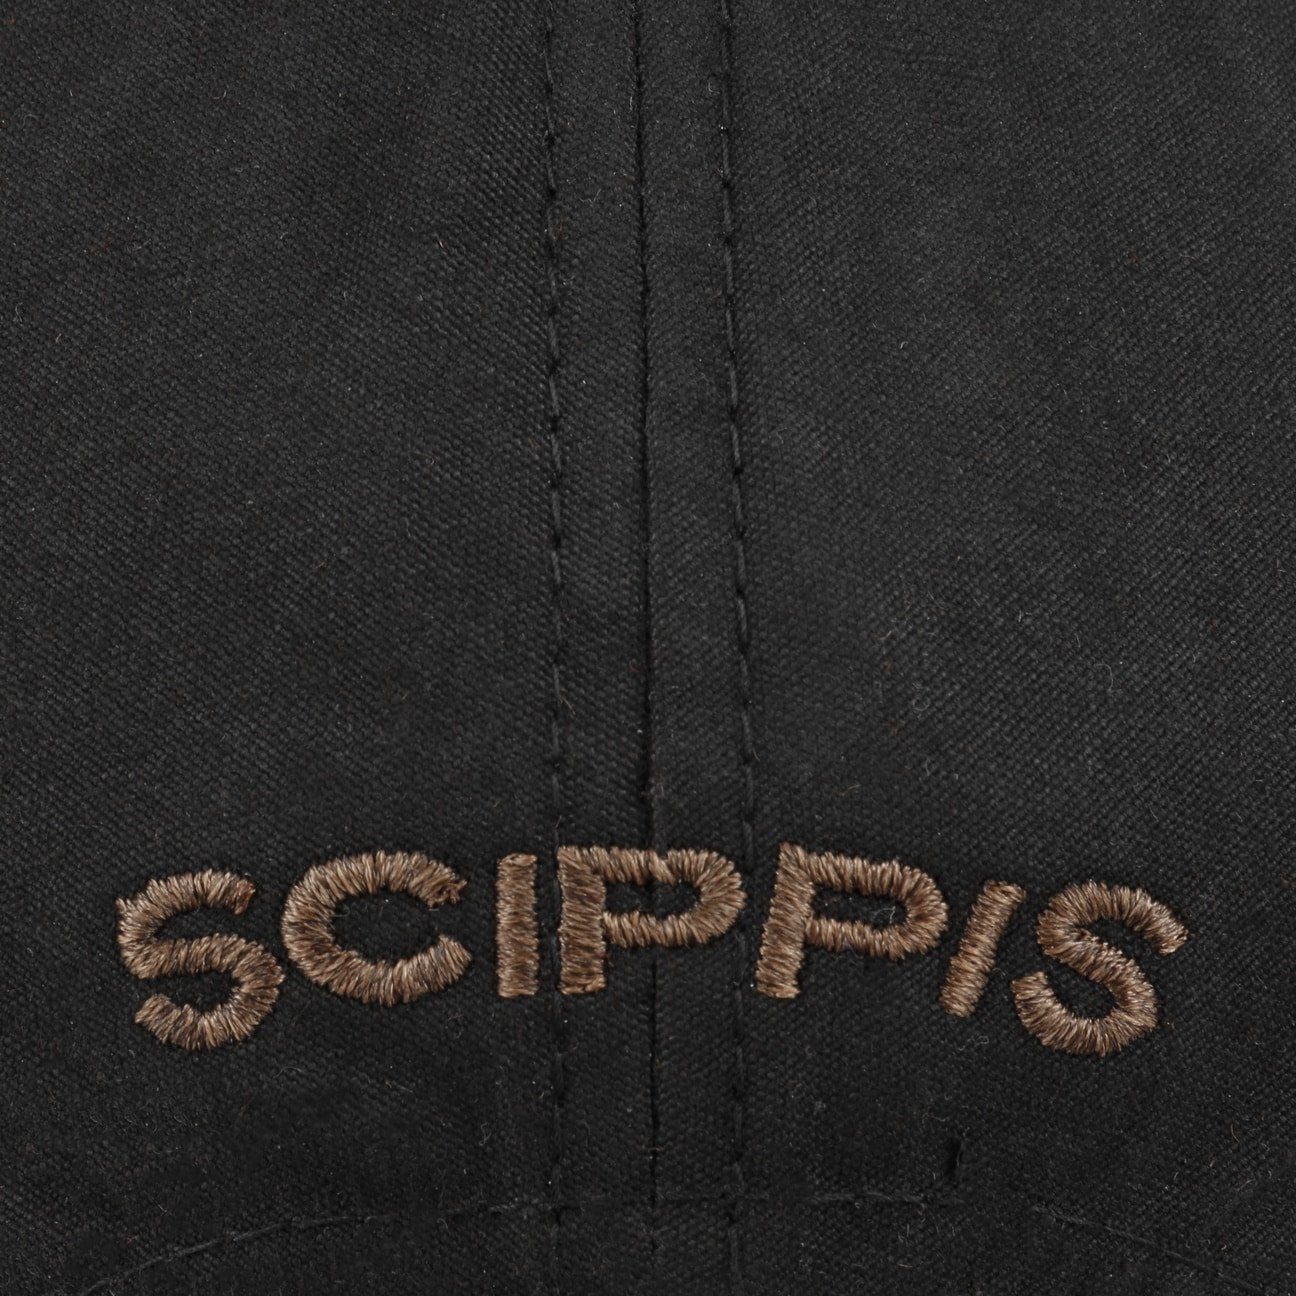 Scippis Baseball Cap (1-St) schwarz Schirm Basecap mit